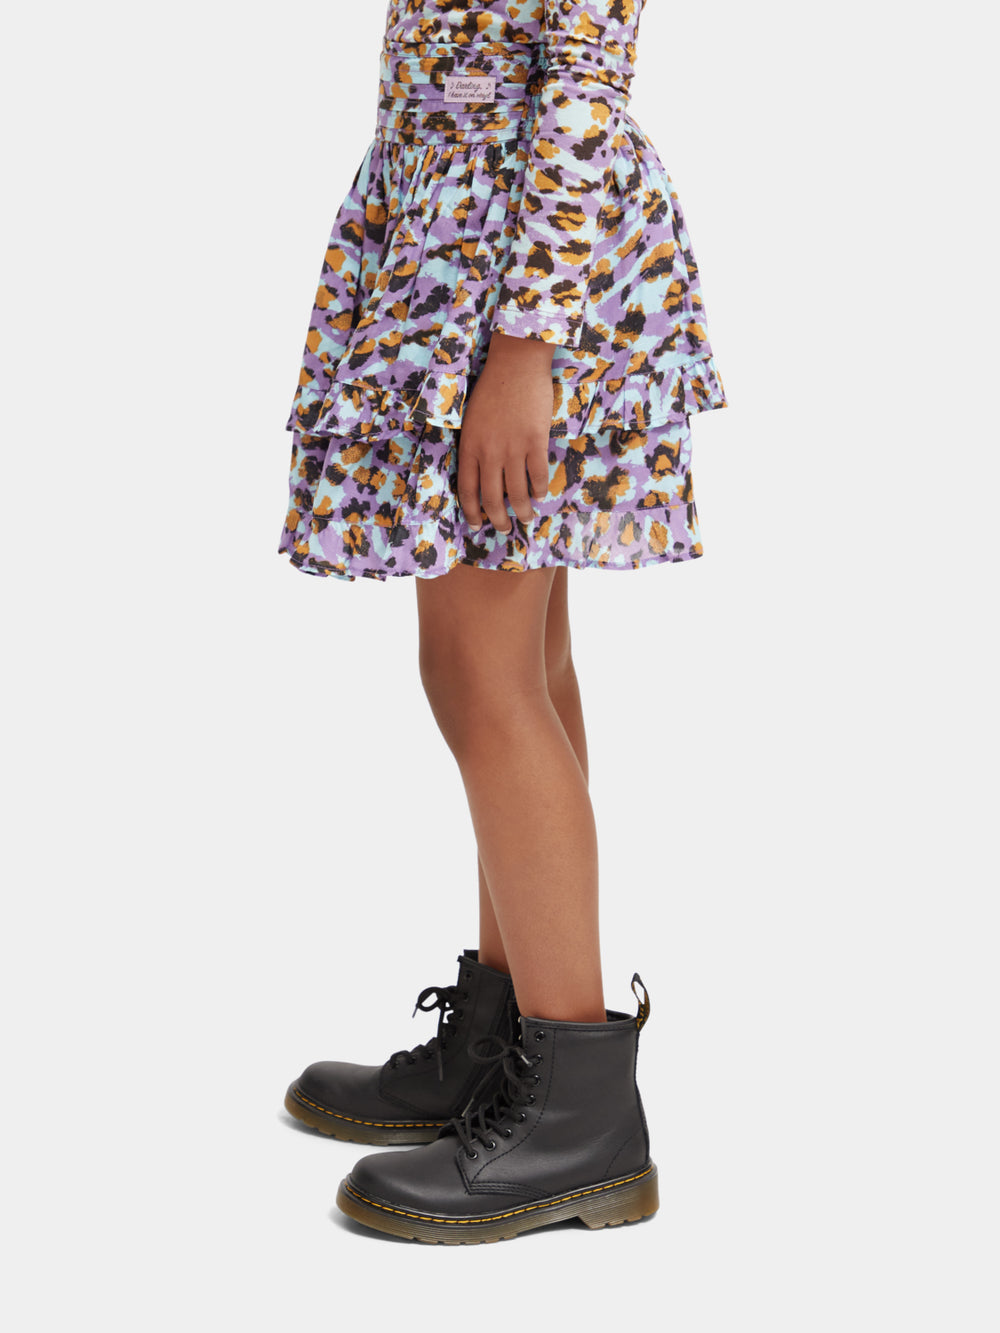 Kids - Tiered mini skirt - Scotch & Soda NZ